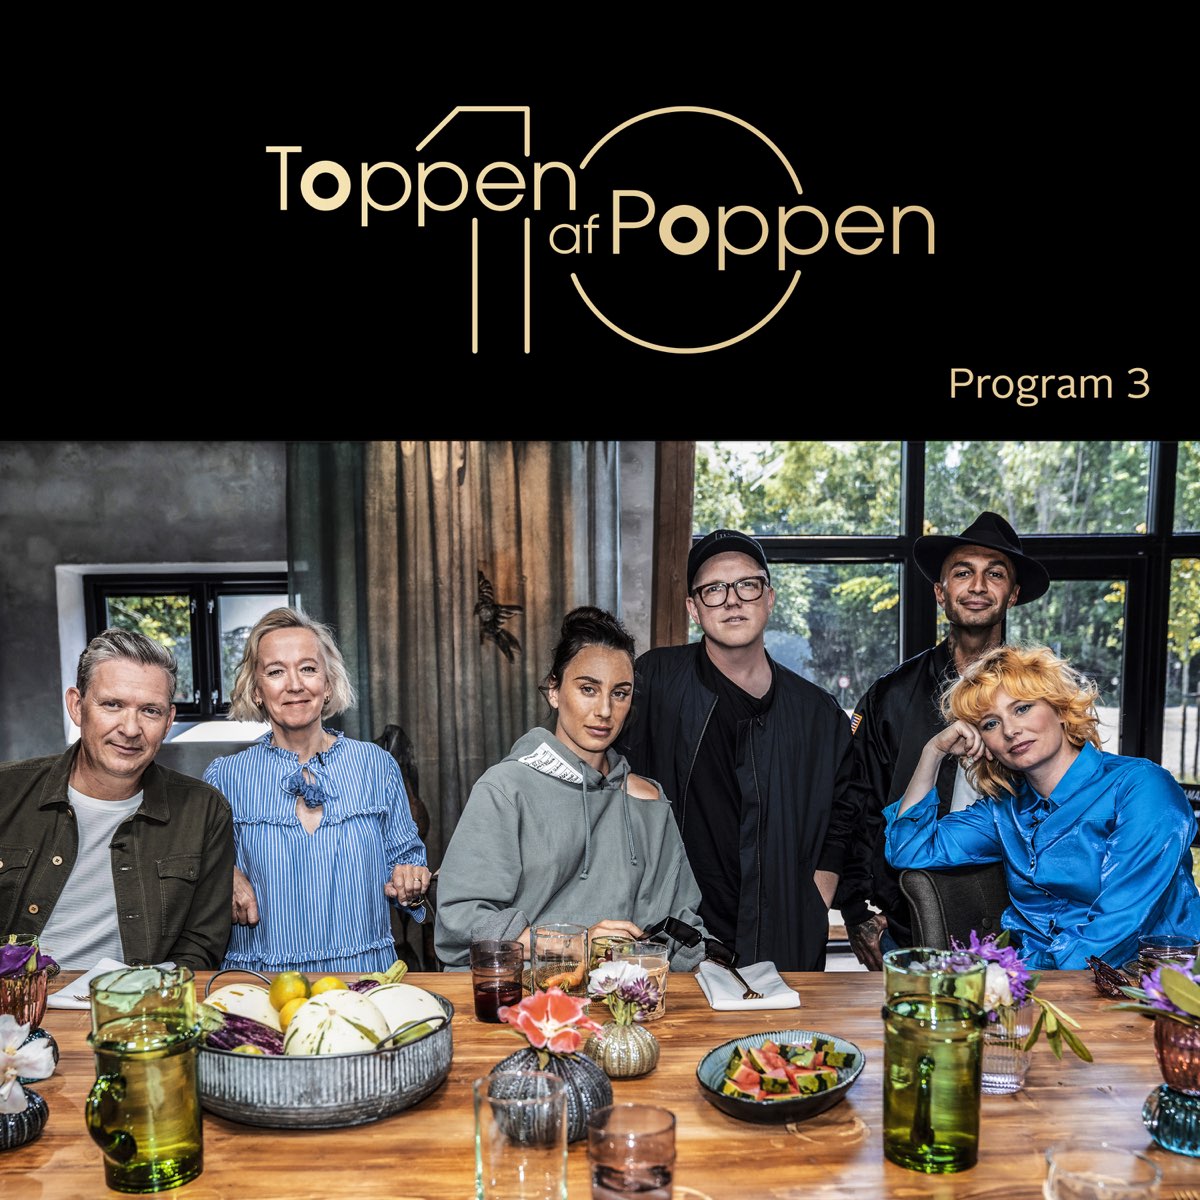 Toppen af Poppen 2020 - Program 3 - EP by Artists on Apple Music